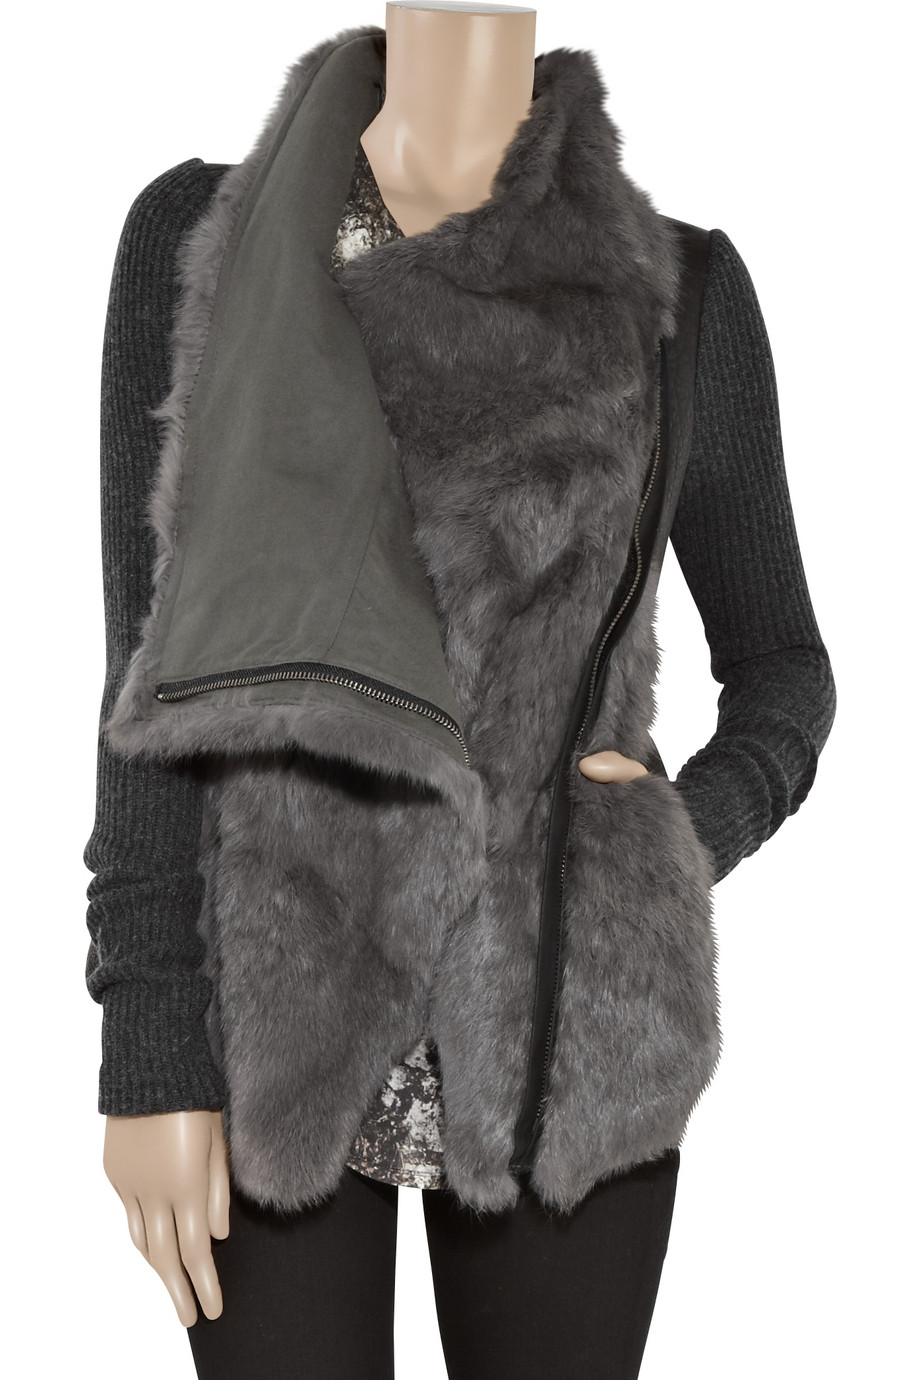 Helmut Lang Rabbit Fur Jacket in Grey (Gray) - Lyst